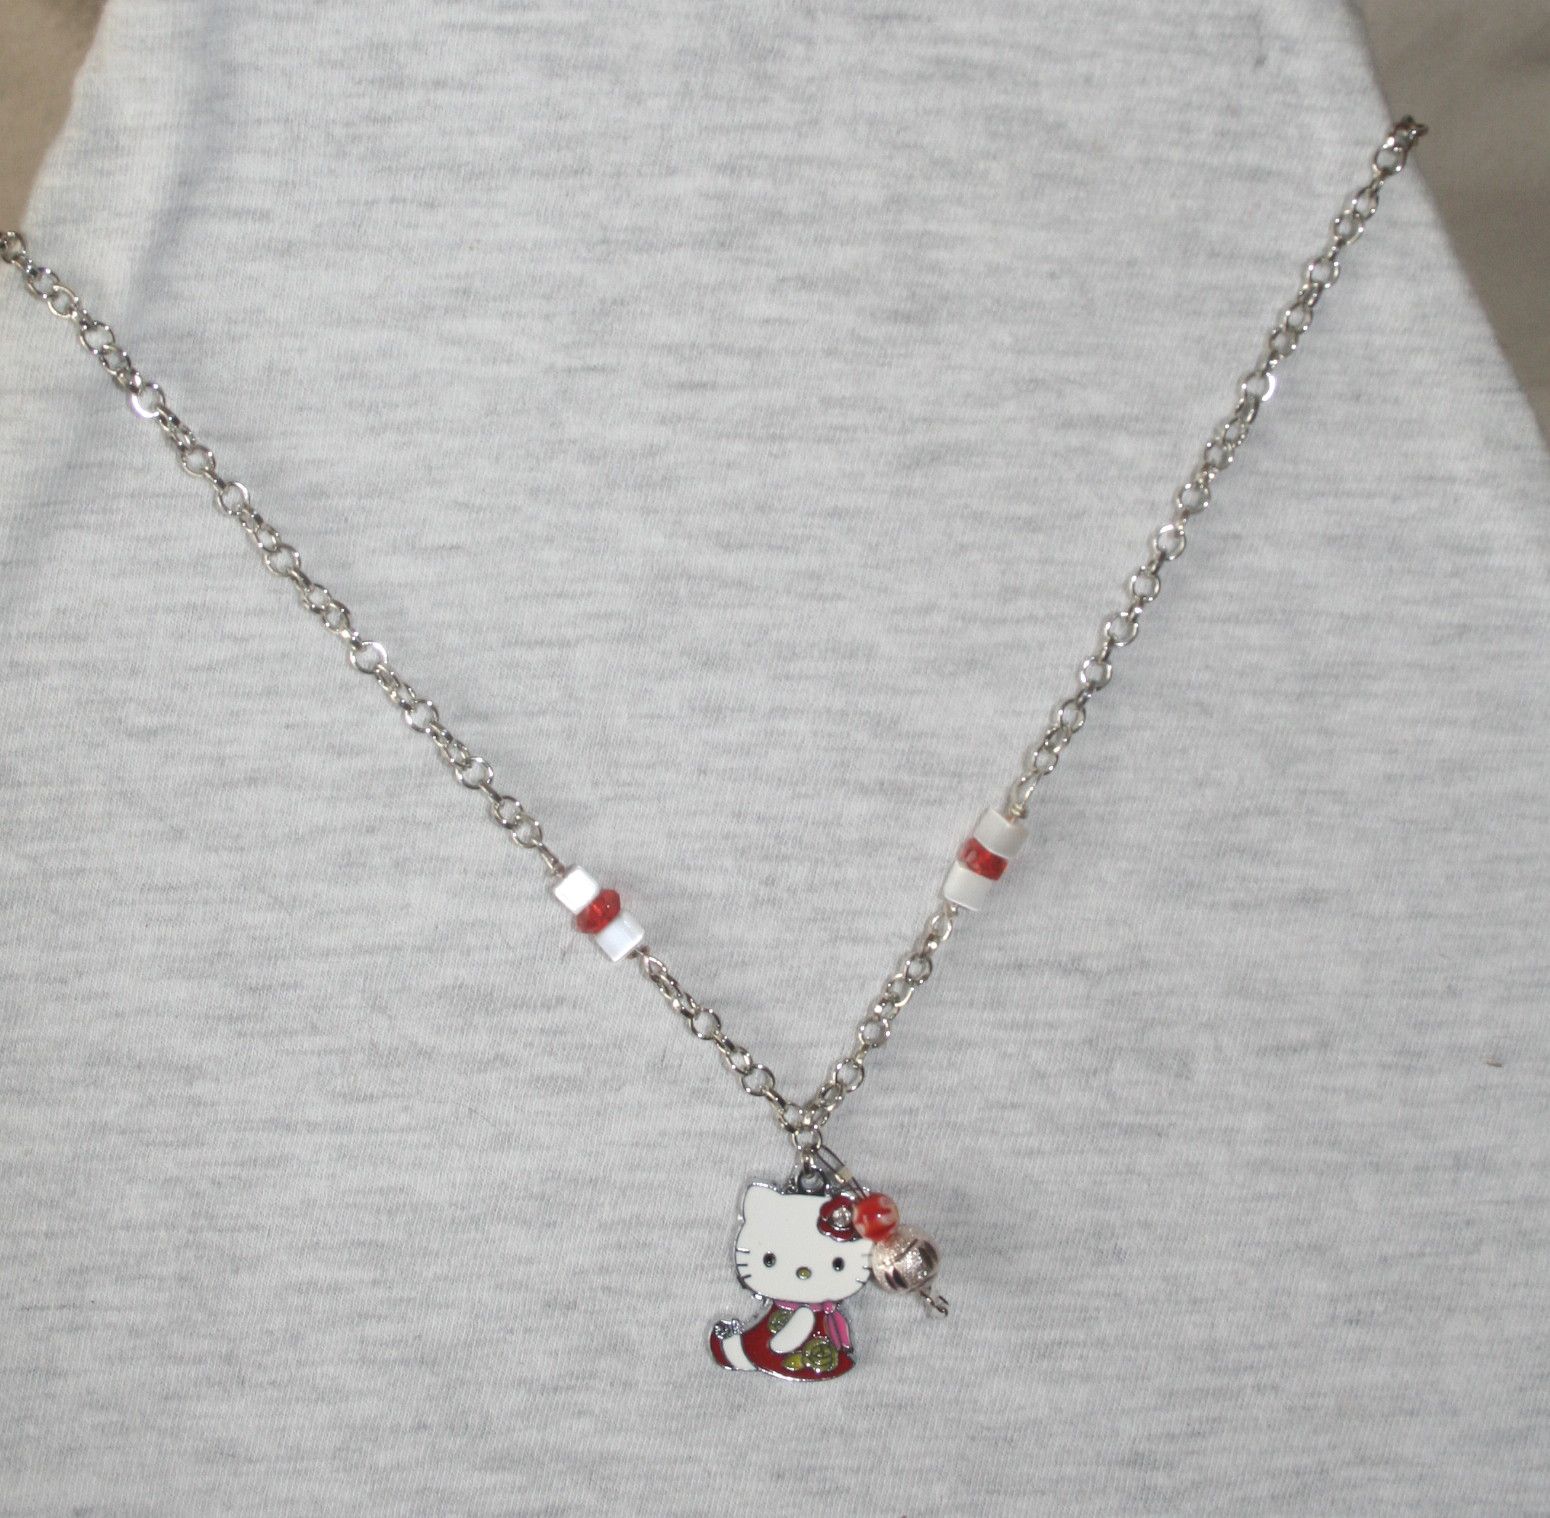 Collier Hello Kitty - Le blog de Créations-Gil,bijoux artisanaux